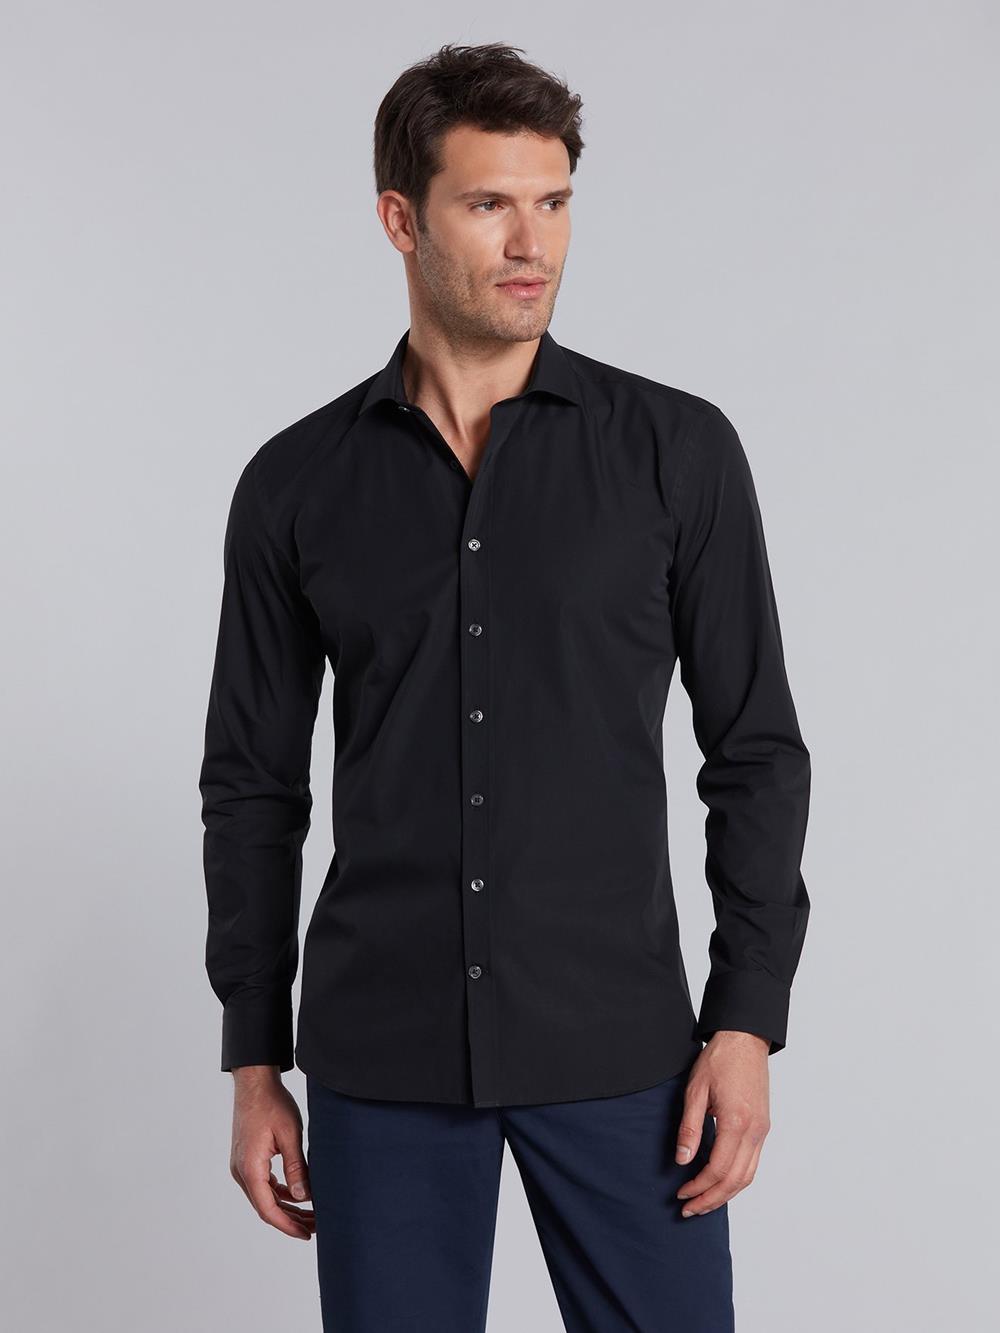 Black twill shirt